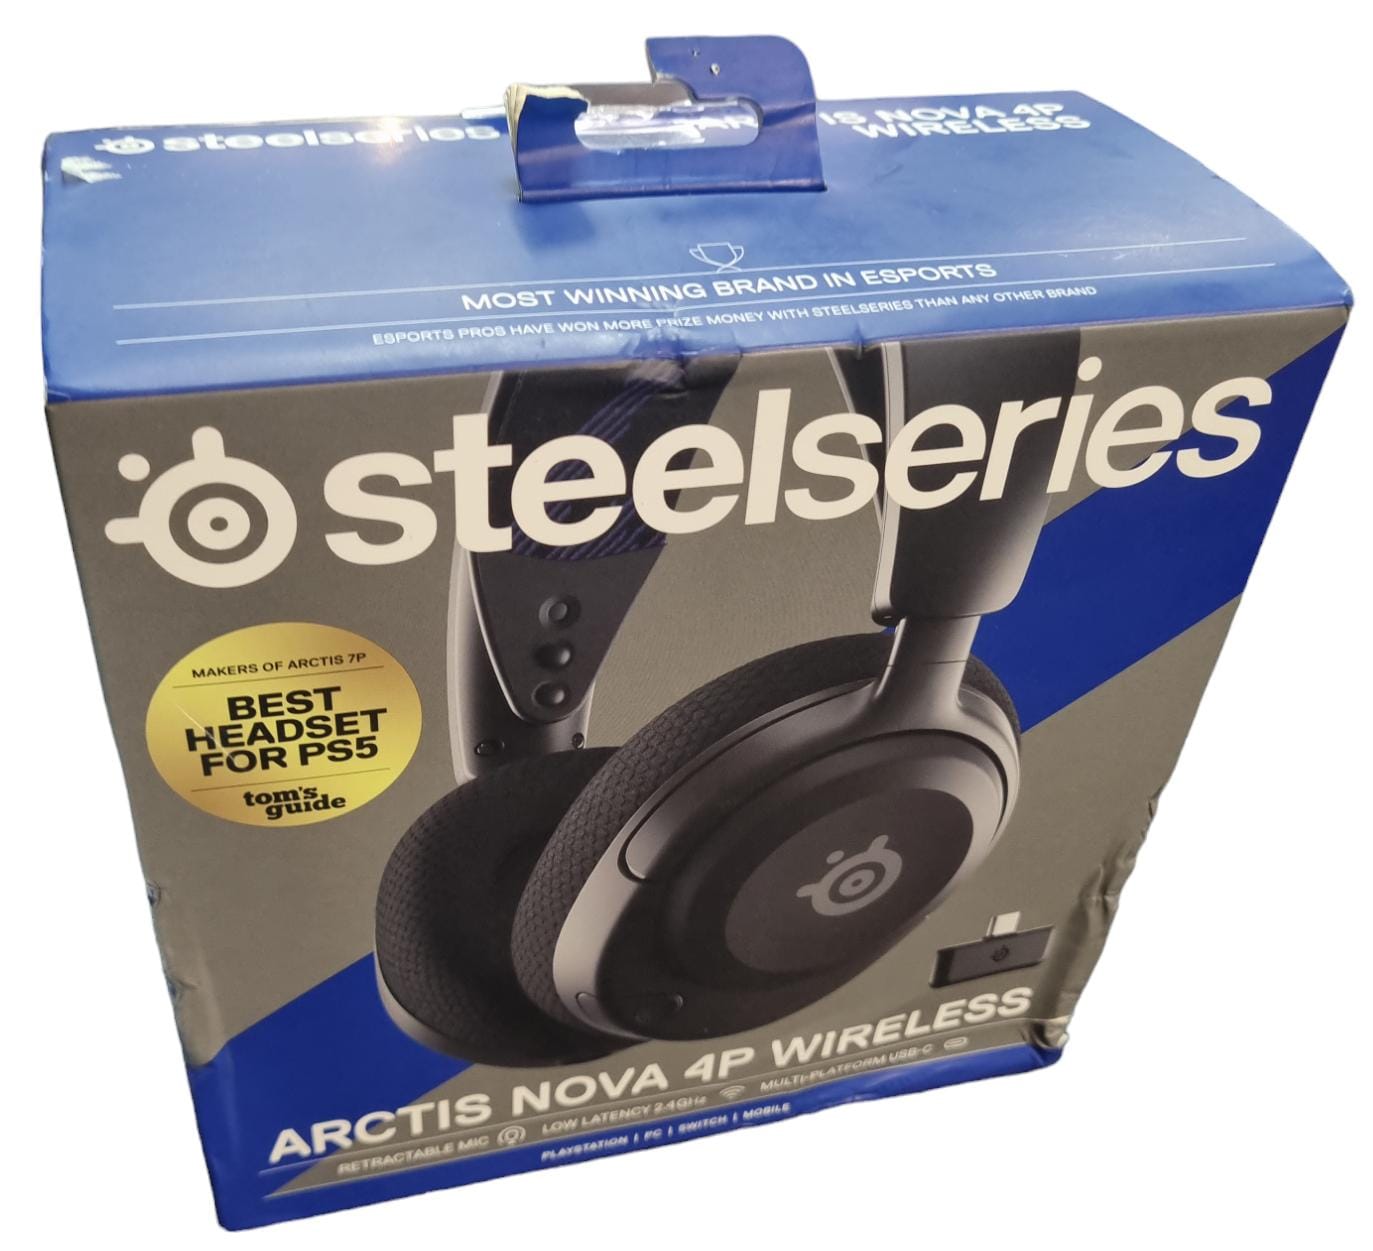 Steelseries Arctis Nova 4P Wireless Head Set - Boxed like new